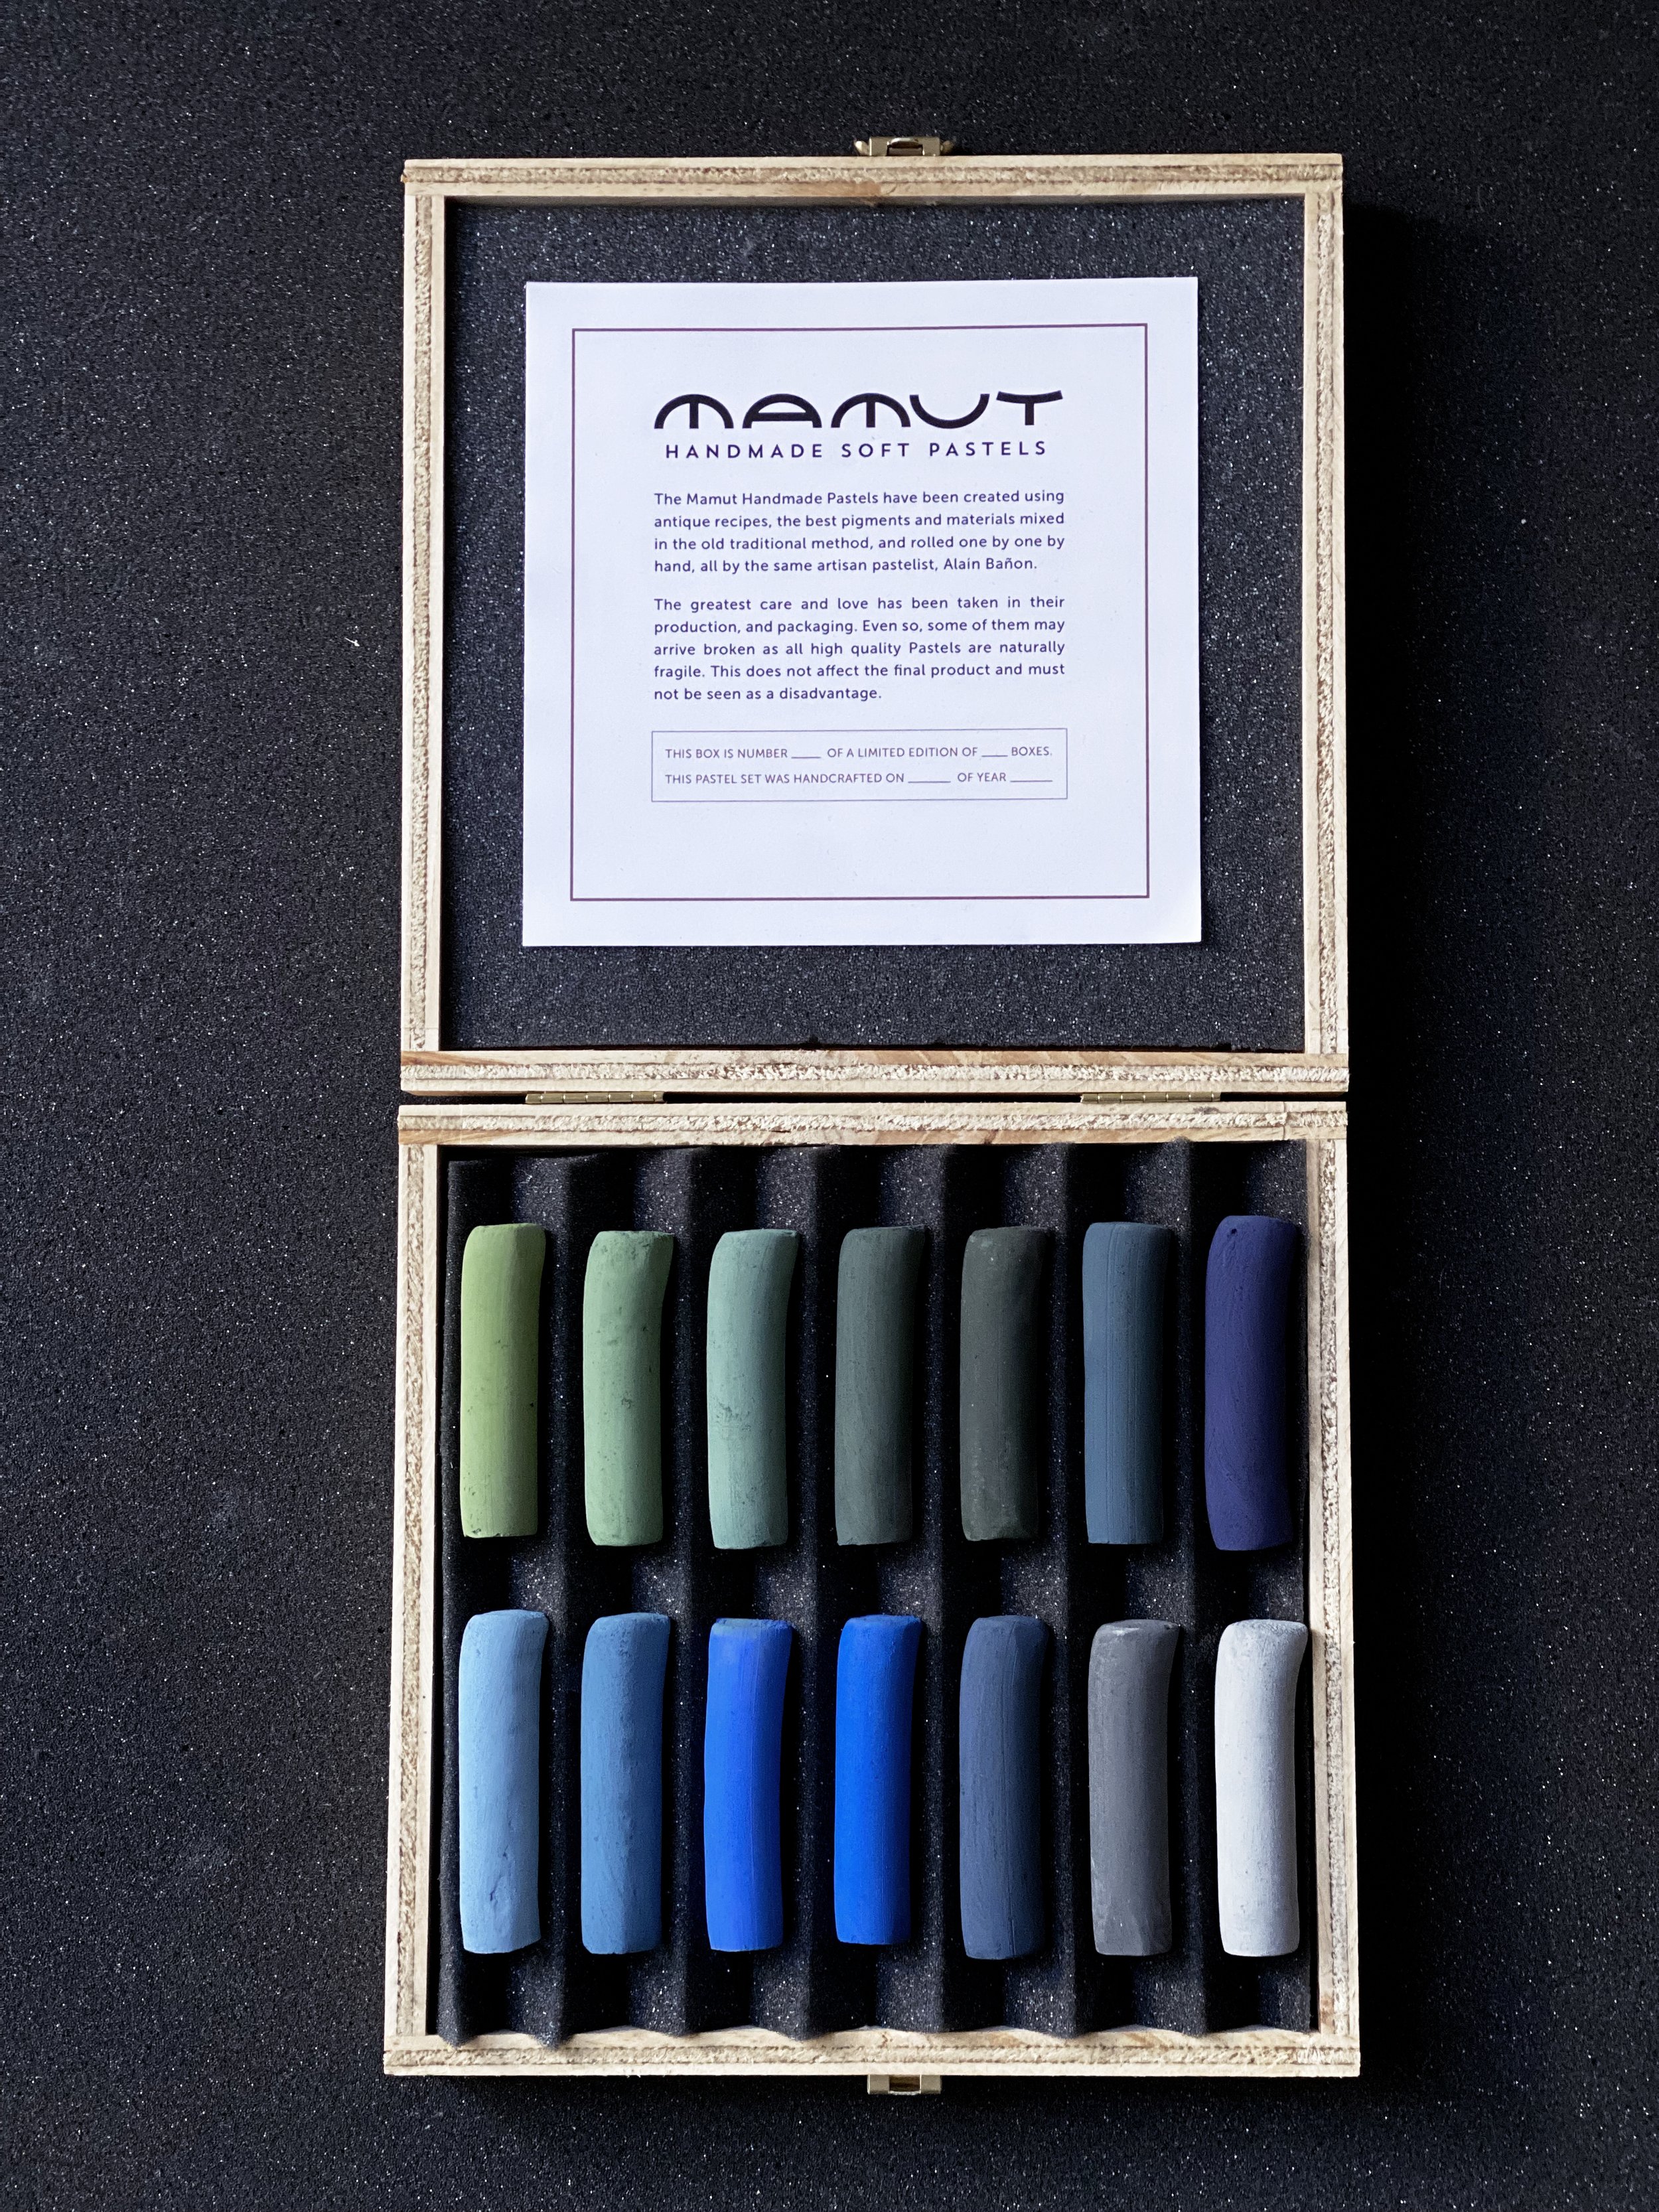 Sets of 14 Big Mamut Soft Pastels — Mamut soft pastel sets, a selection of  handmade soft pastels by Mamut Pastels — MAMUT Handmade Soft Pastels